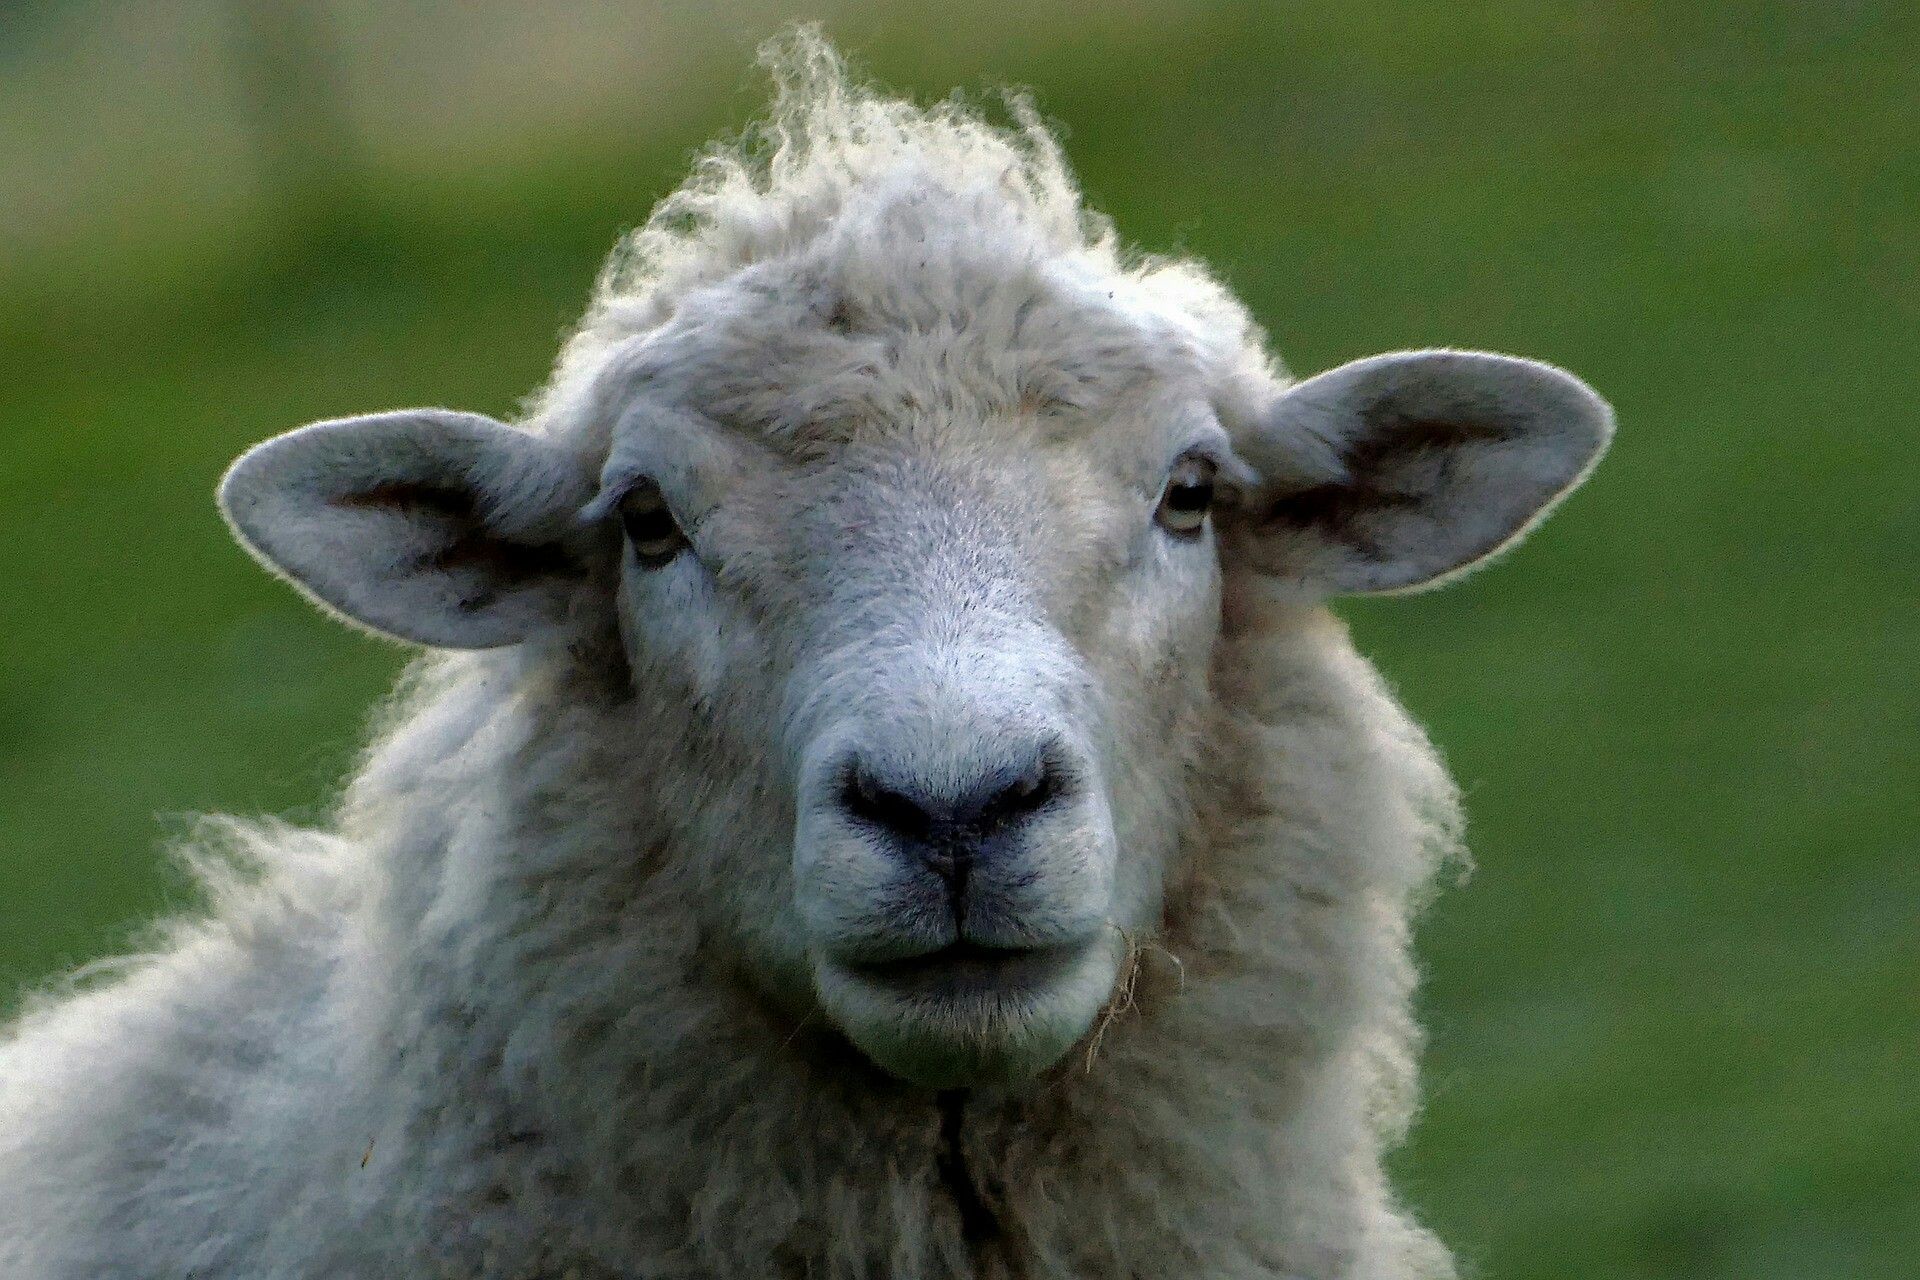 45byu56j67bu67ui قیمت گوسفند زنده در تهران و کرج